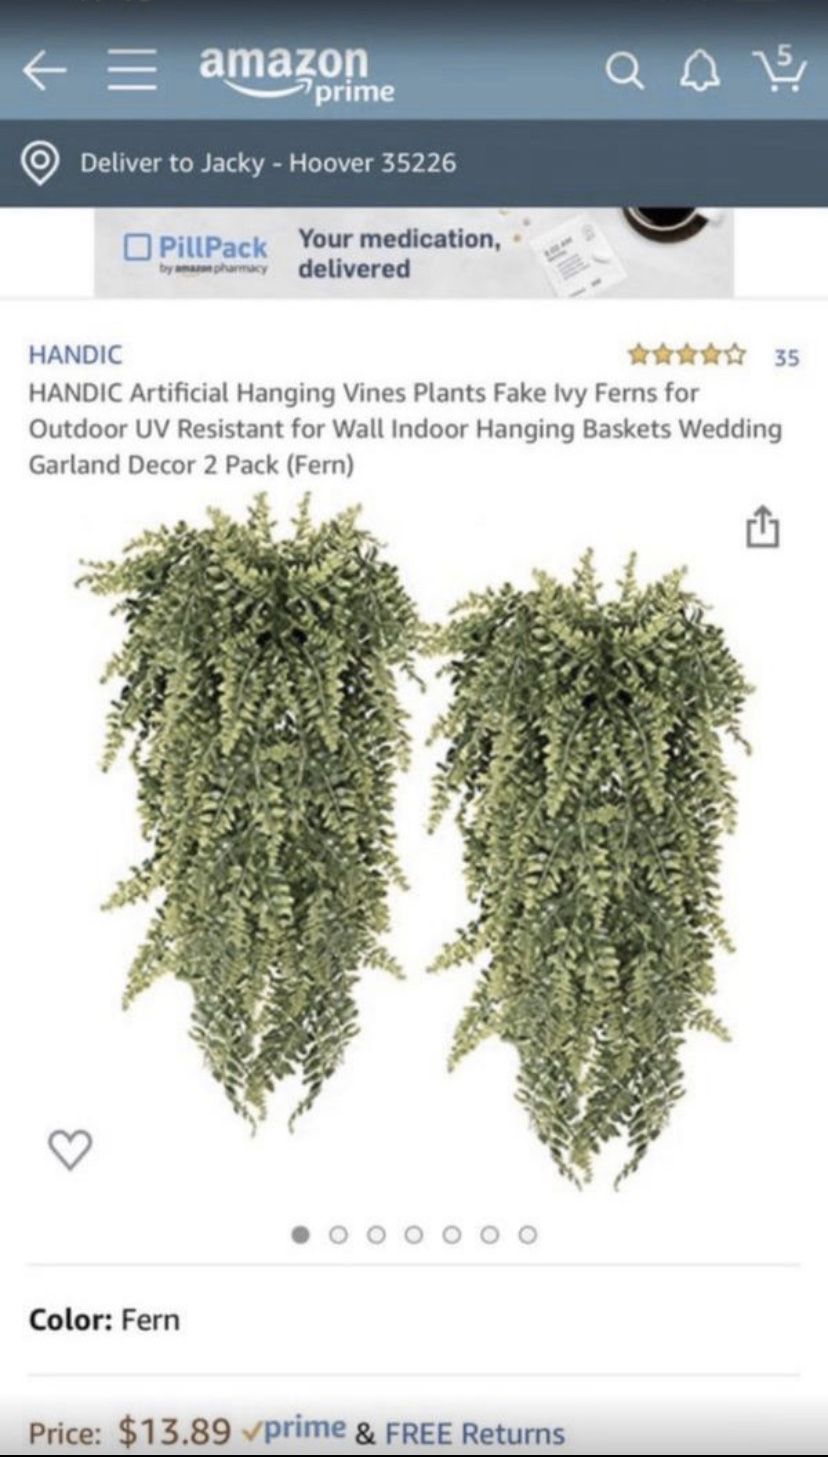 HANDIC Artificial Hanging Vines Plants Fake Ivy Ferns for Outdoor UV Resistant for Wall Indoor Hanging Baskets Wedding Garland Decor 2 Pack (Fern)